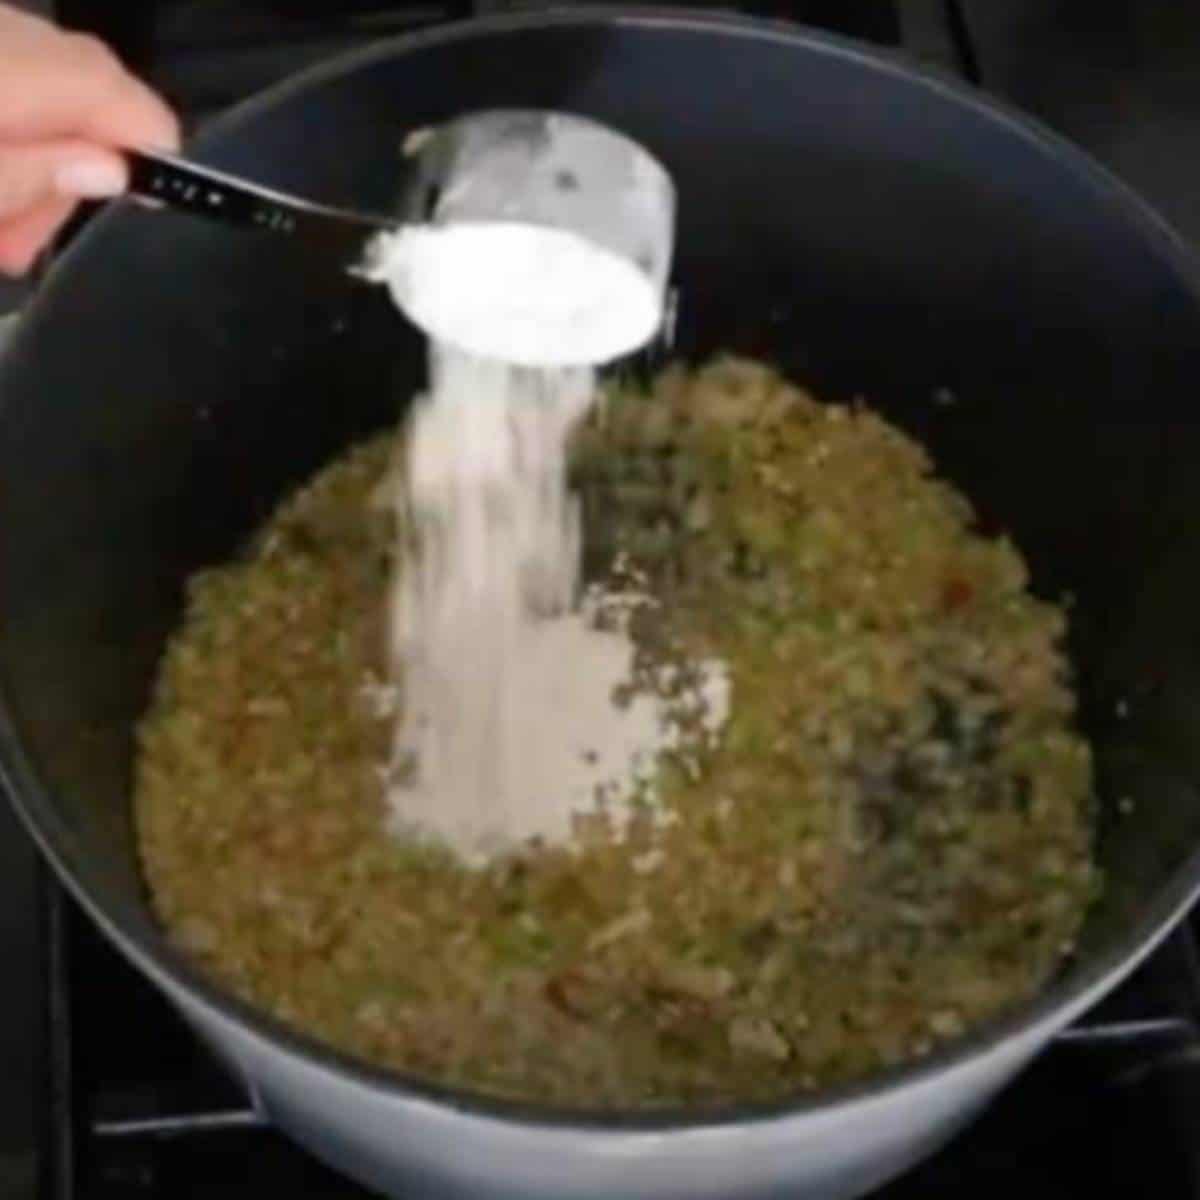 Flour pouring into vegetables.